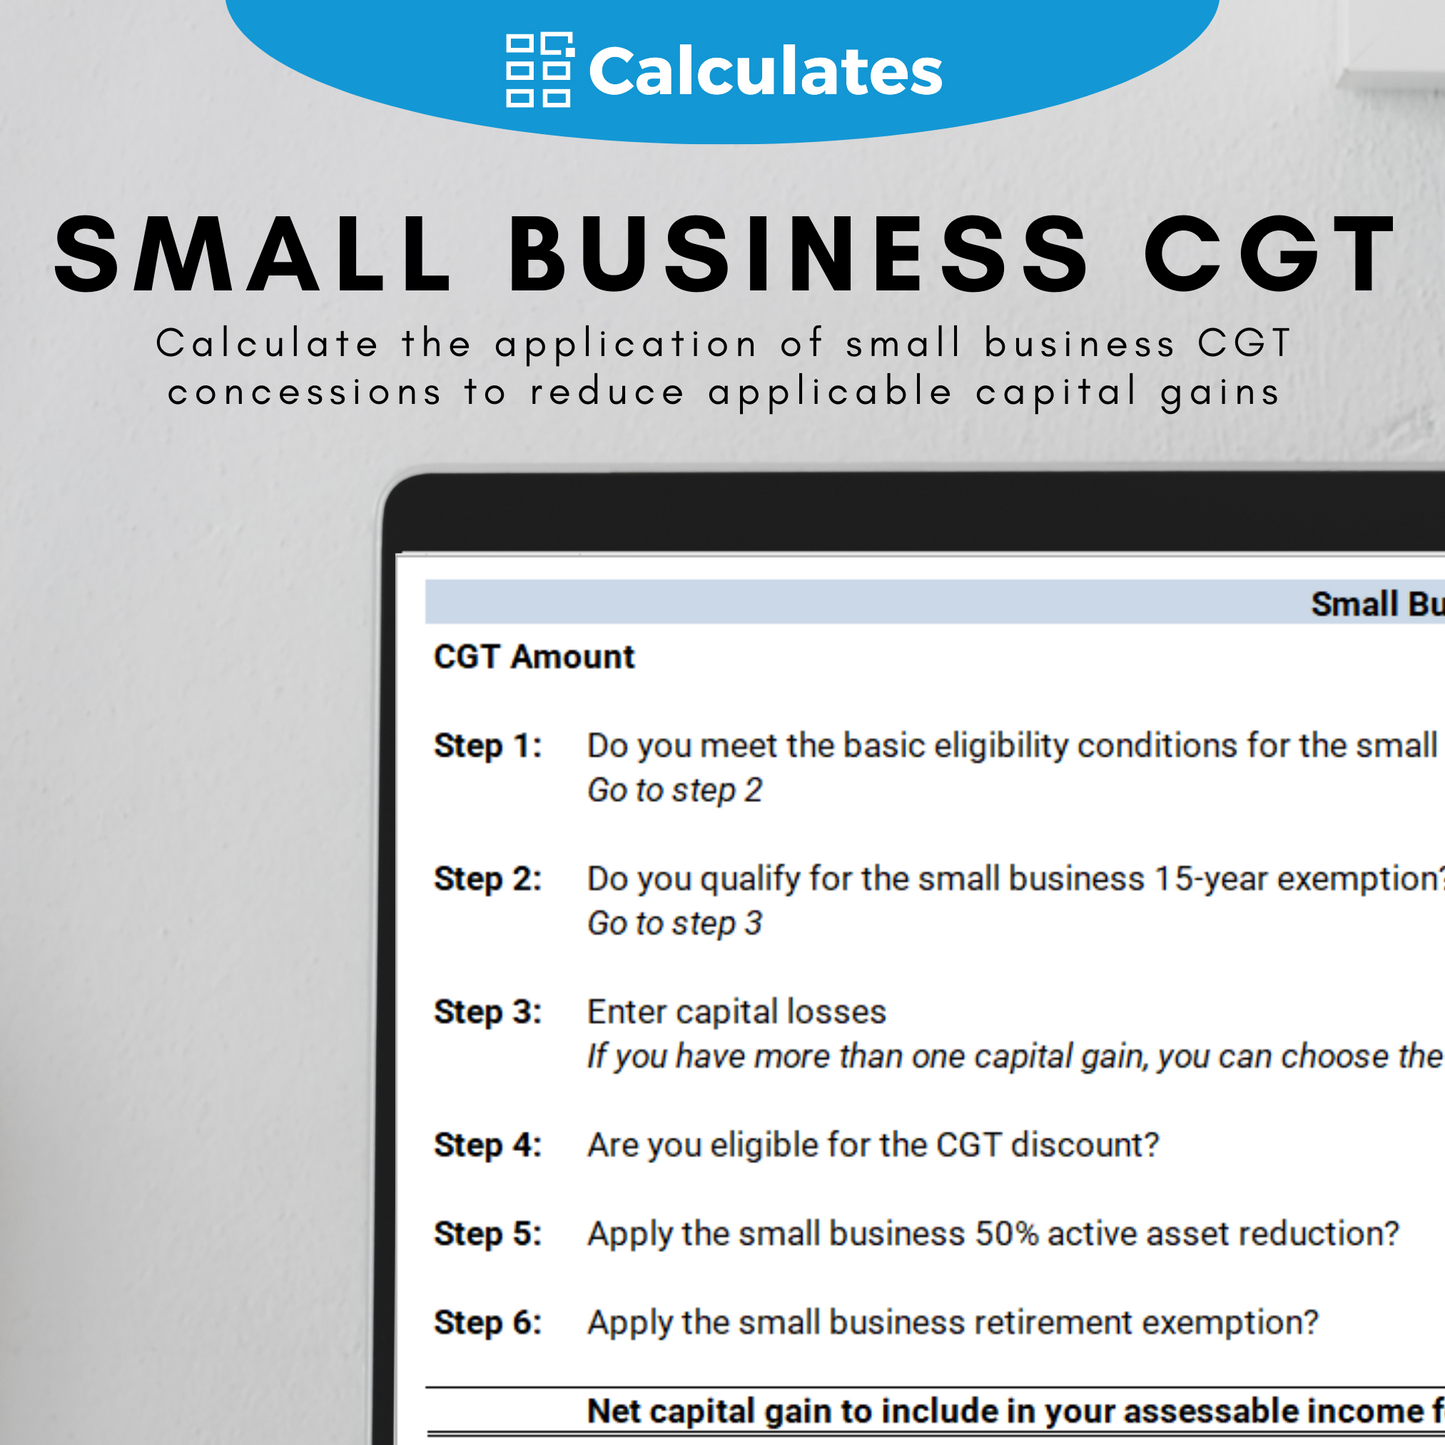 Capital Gains Tax Calculator - FY 23/24